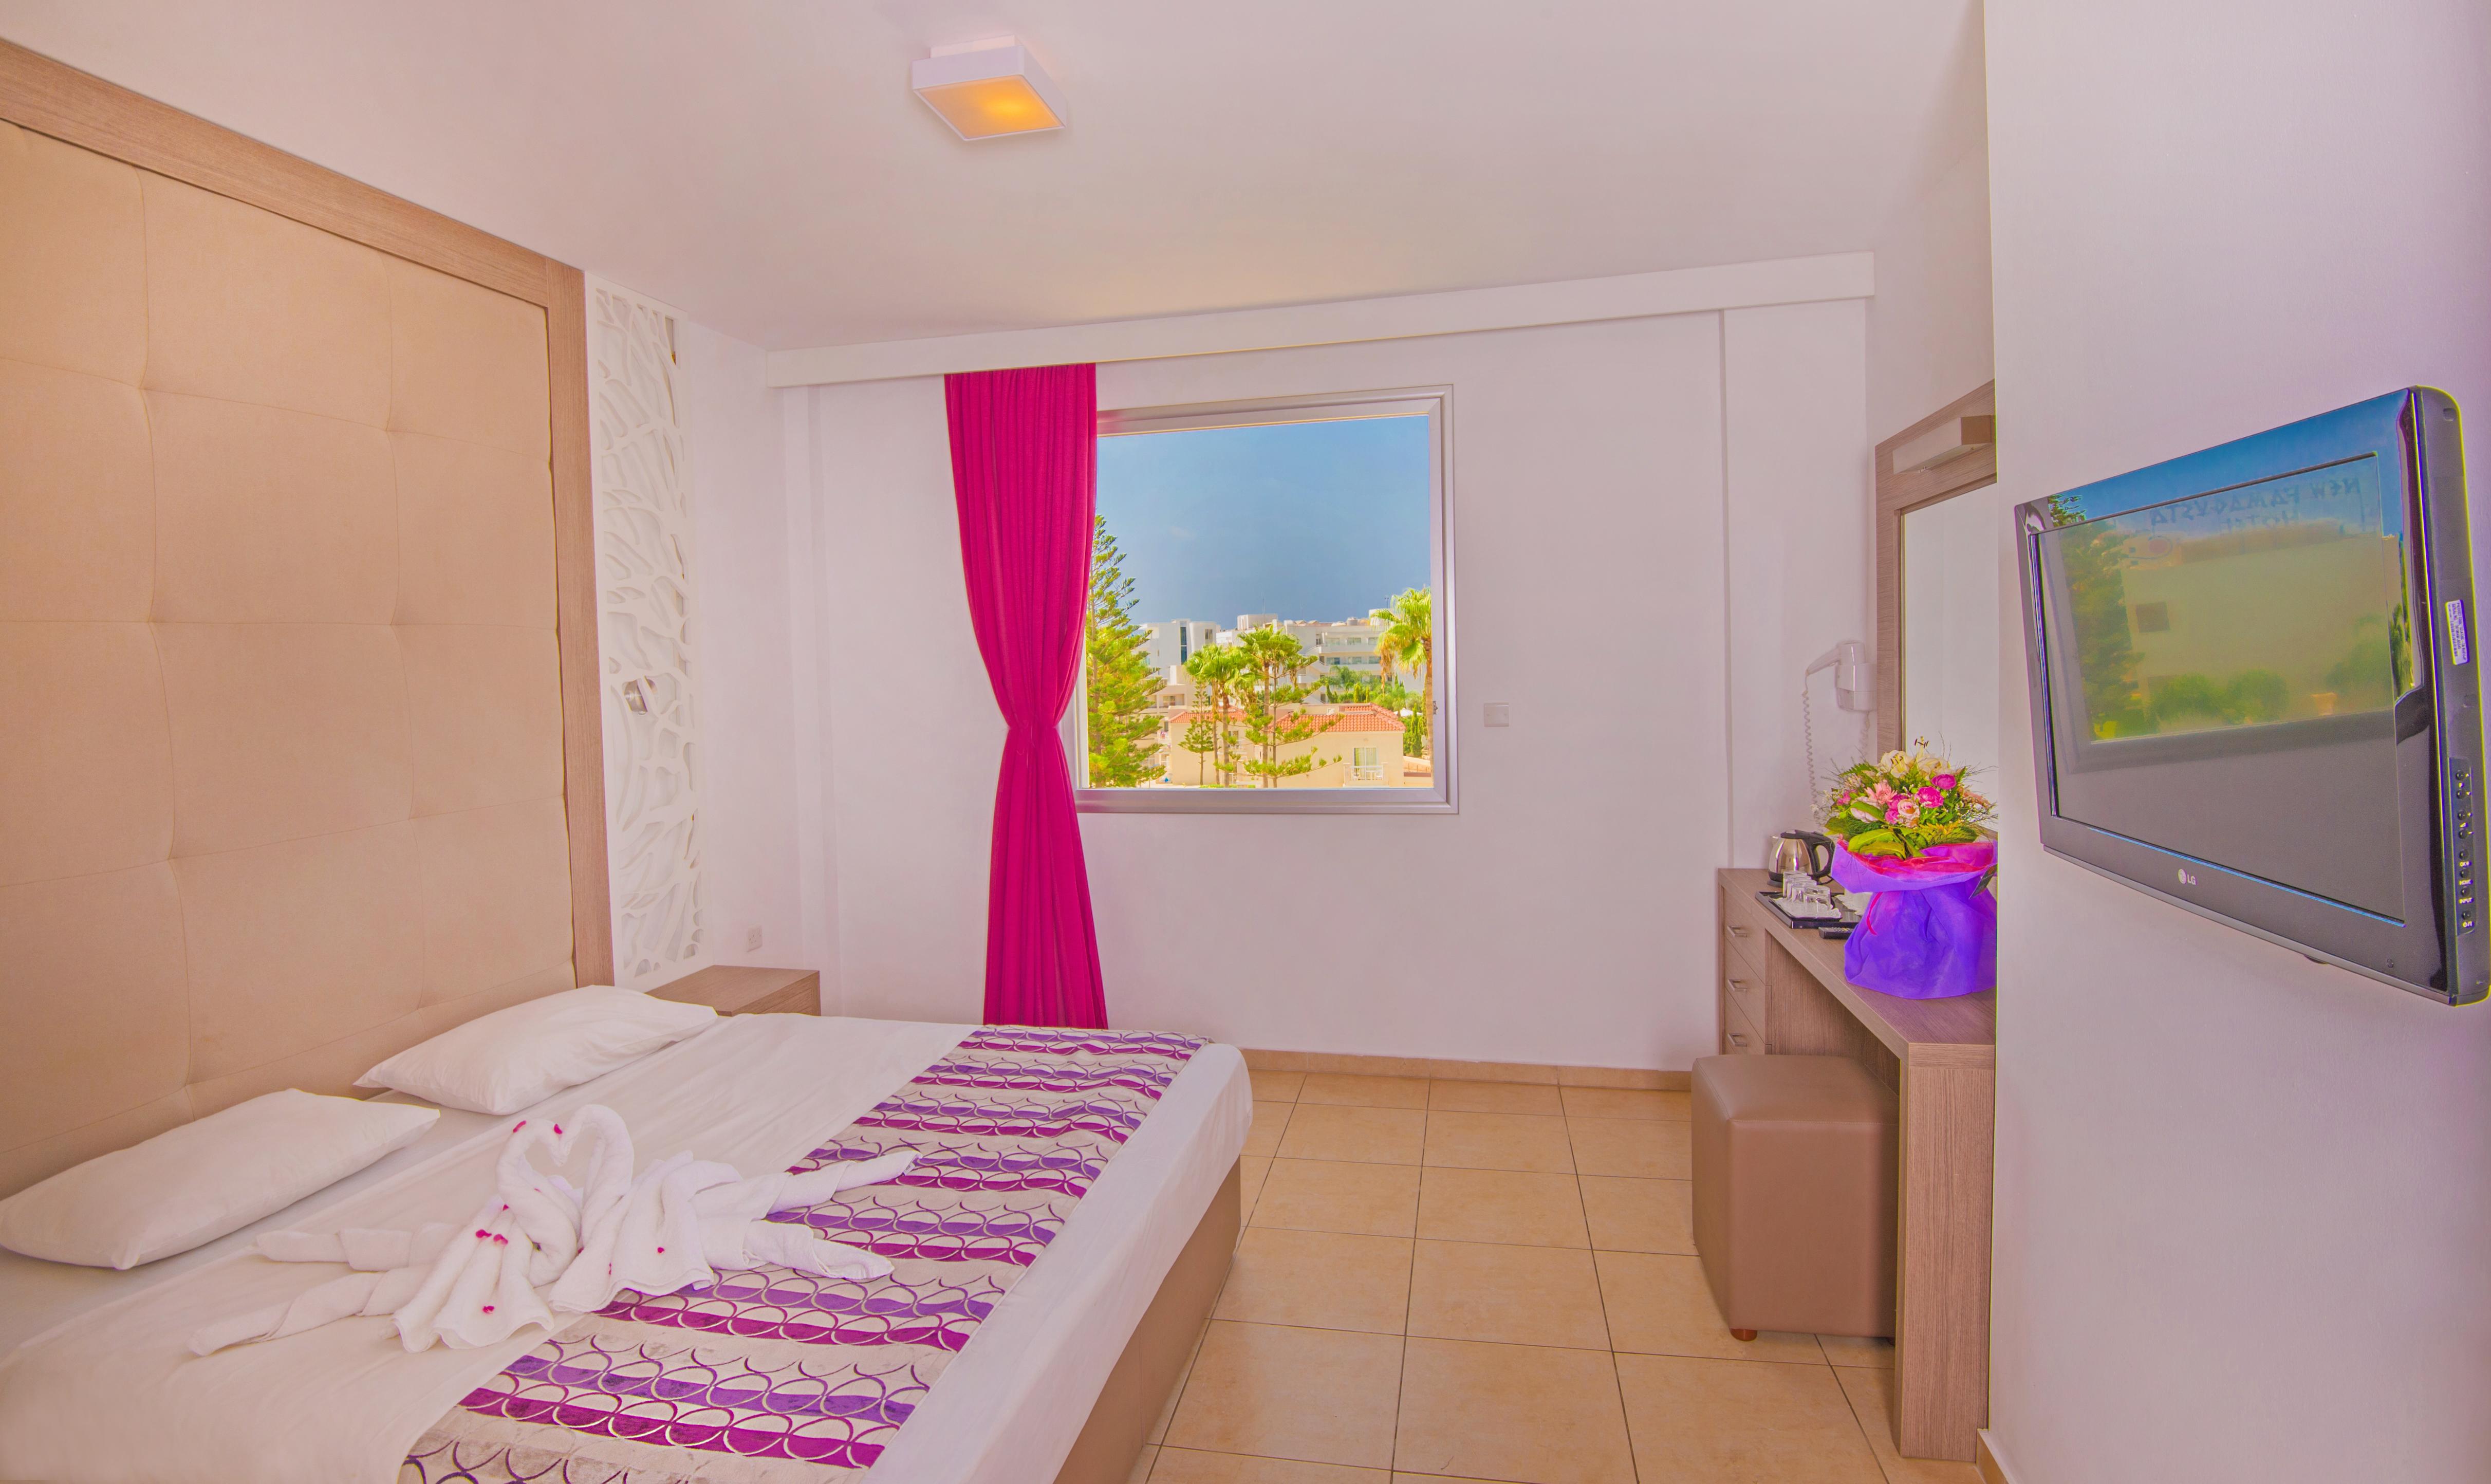 New Famagusta Hotel & Suites Ayia Napa Exterior photo